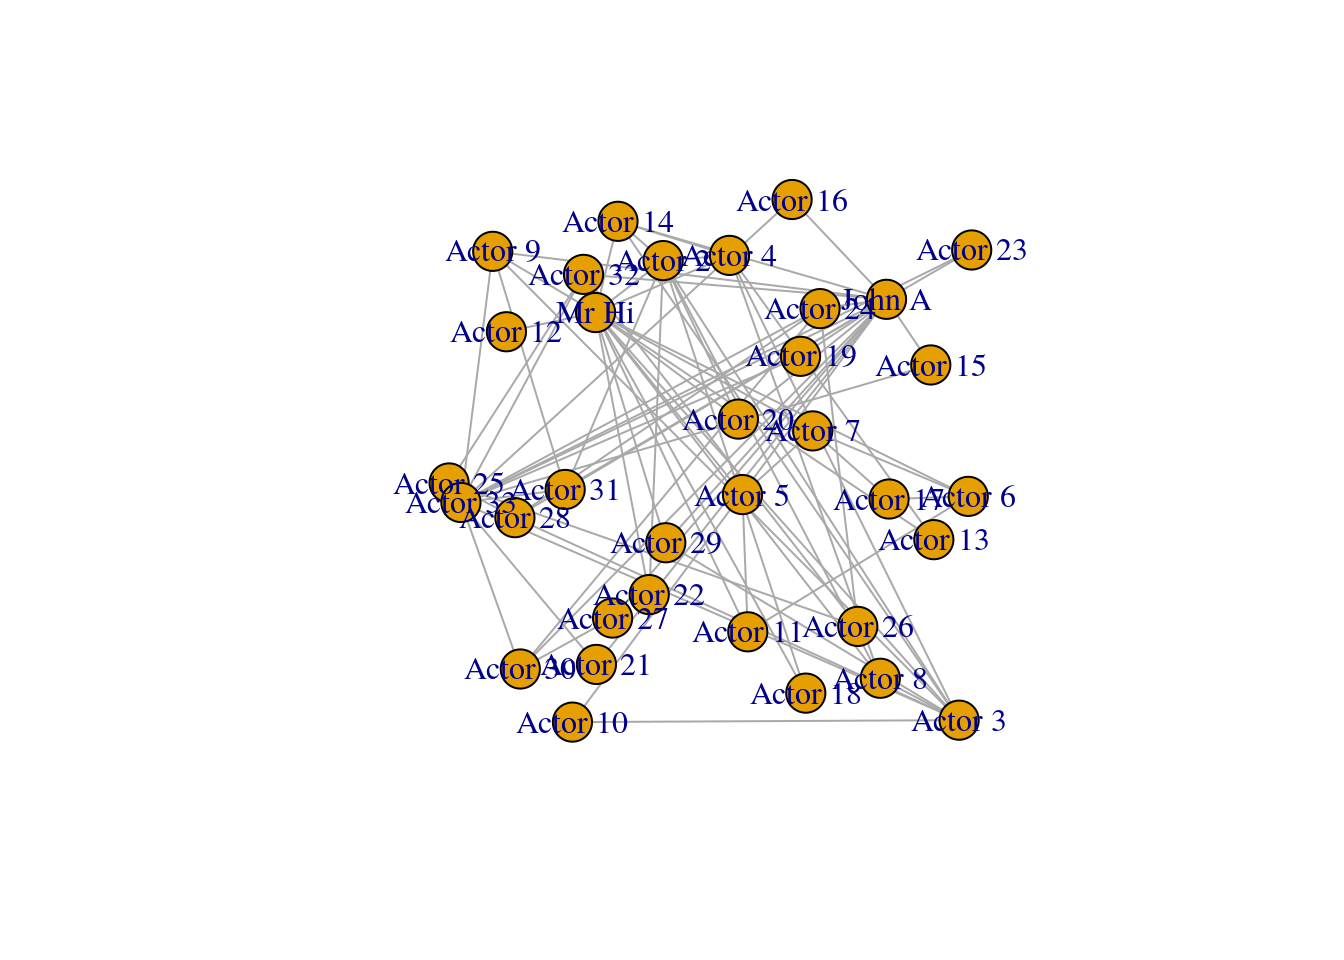 Basic default plot of `karate` network